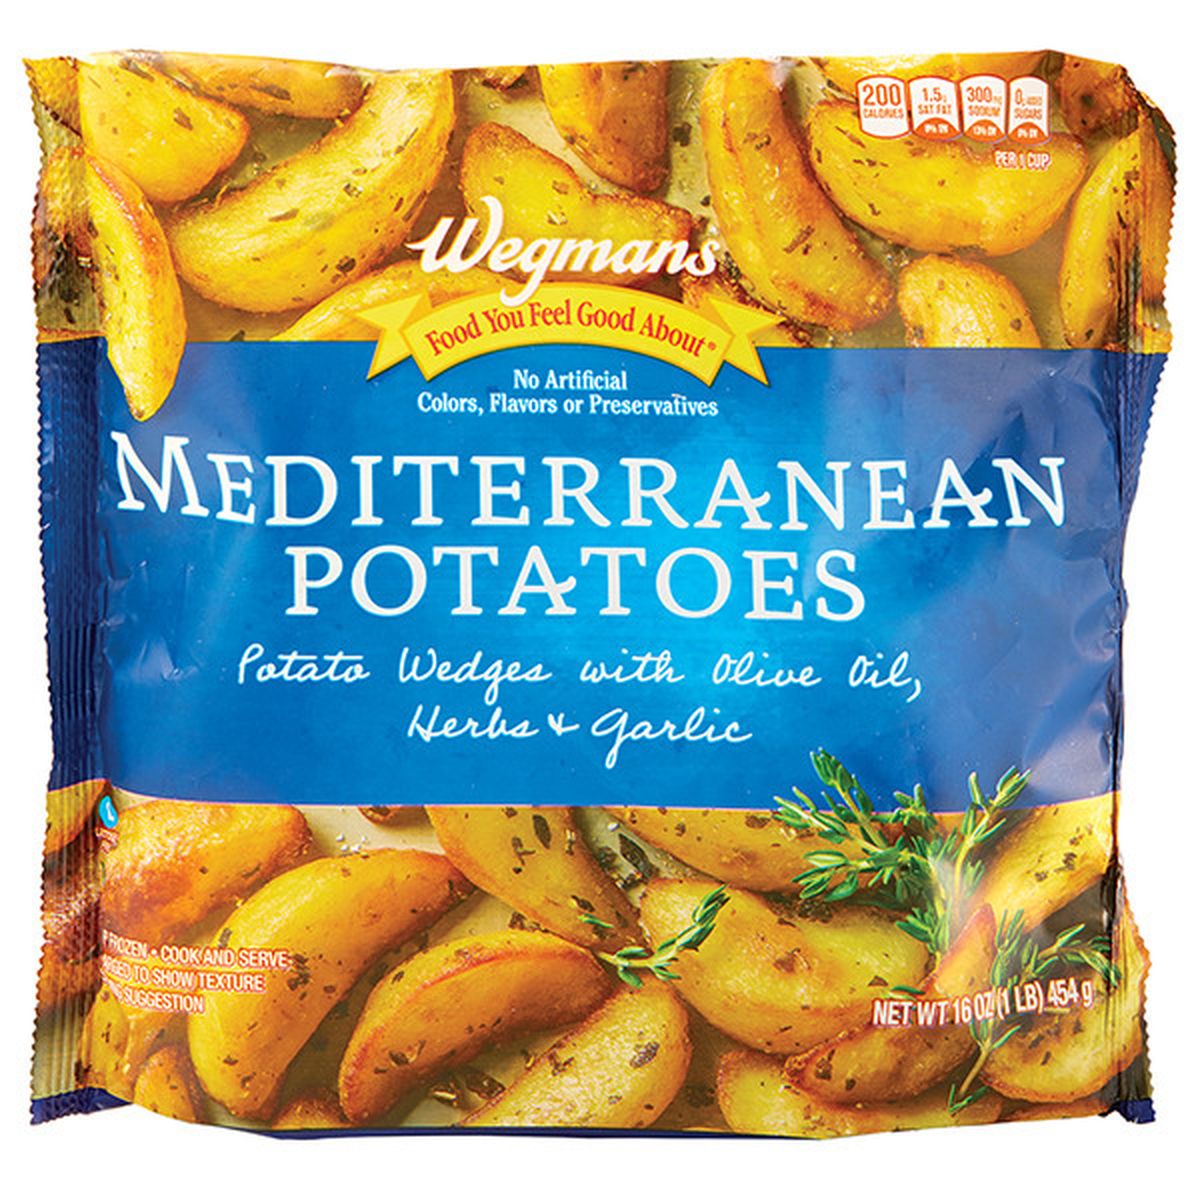 Calories in Wegmans Frozen Mediterranean Potatoes